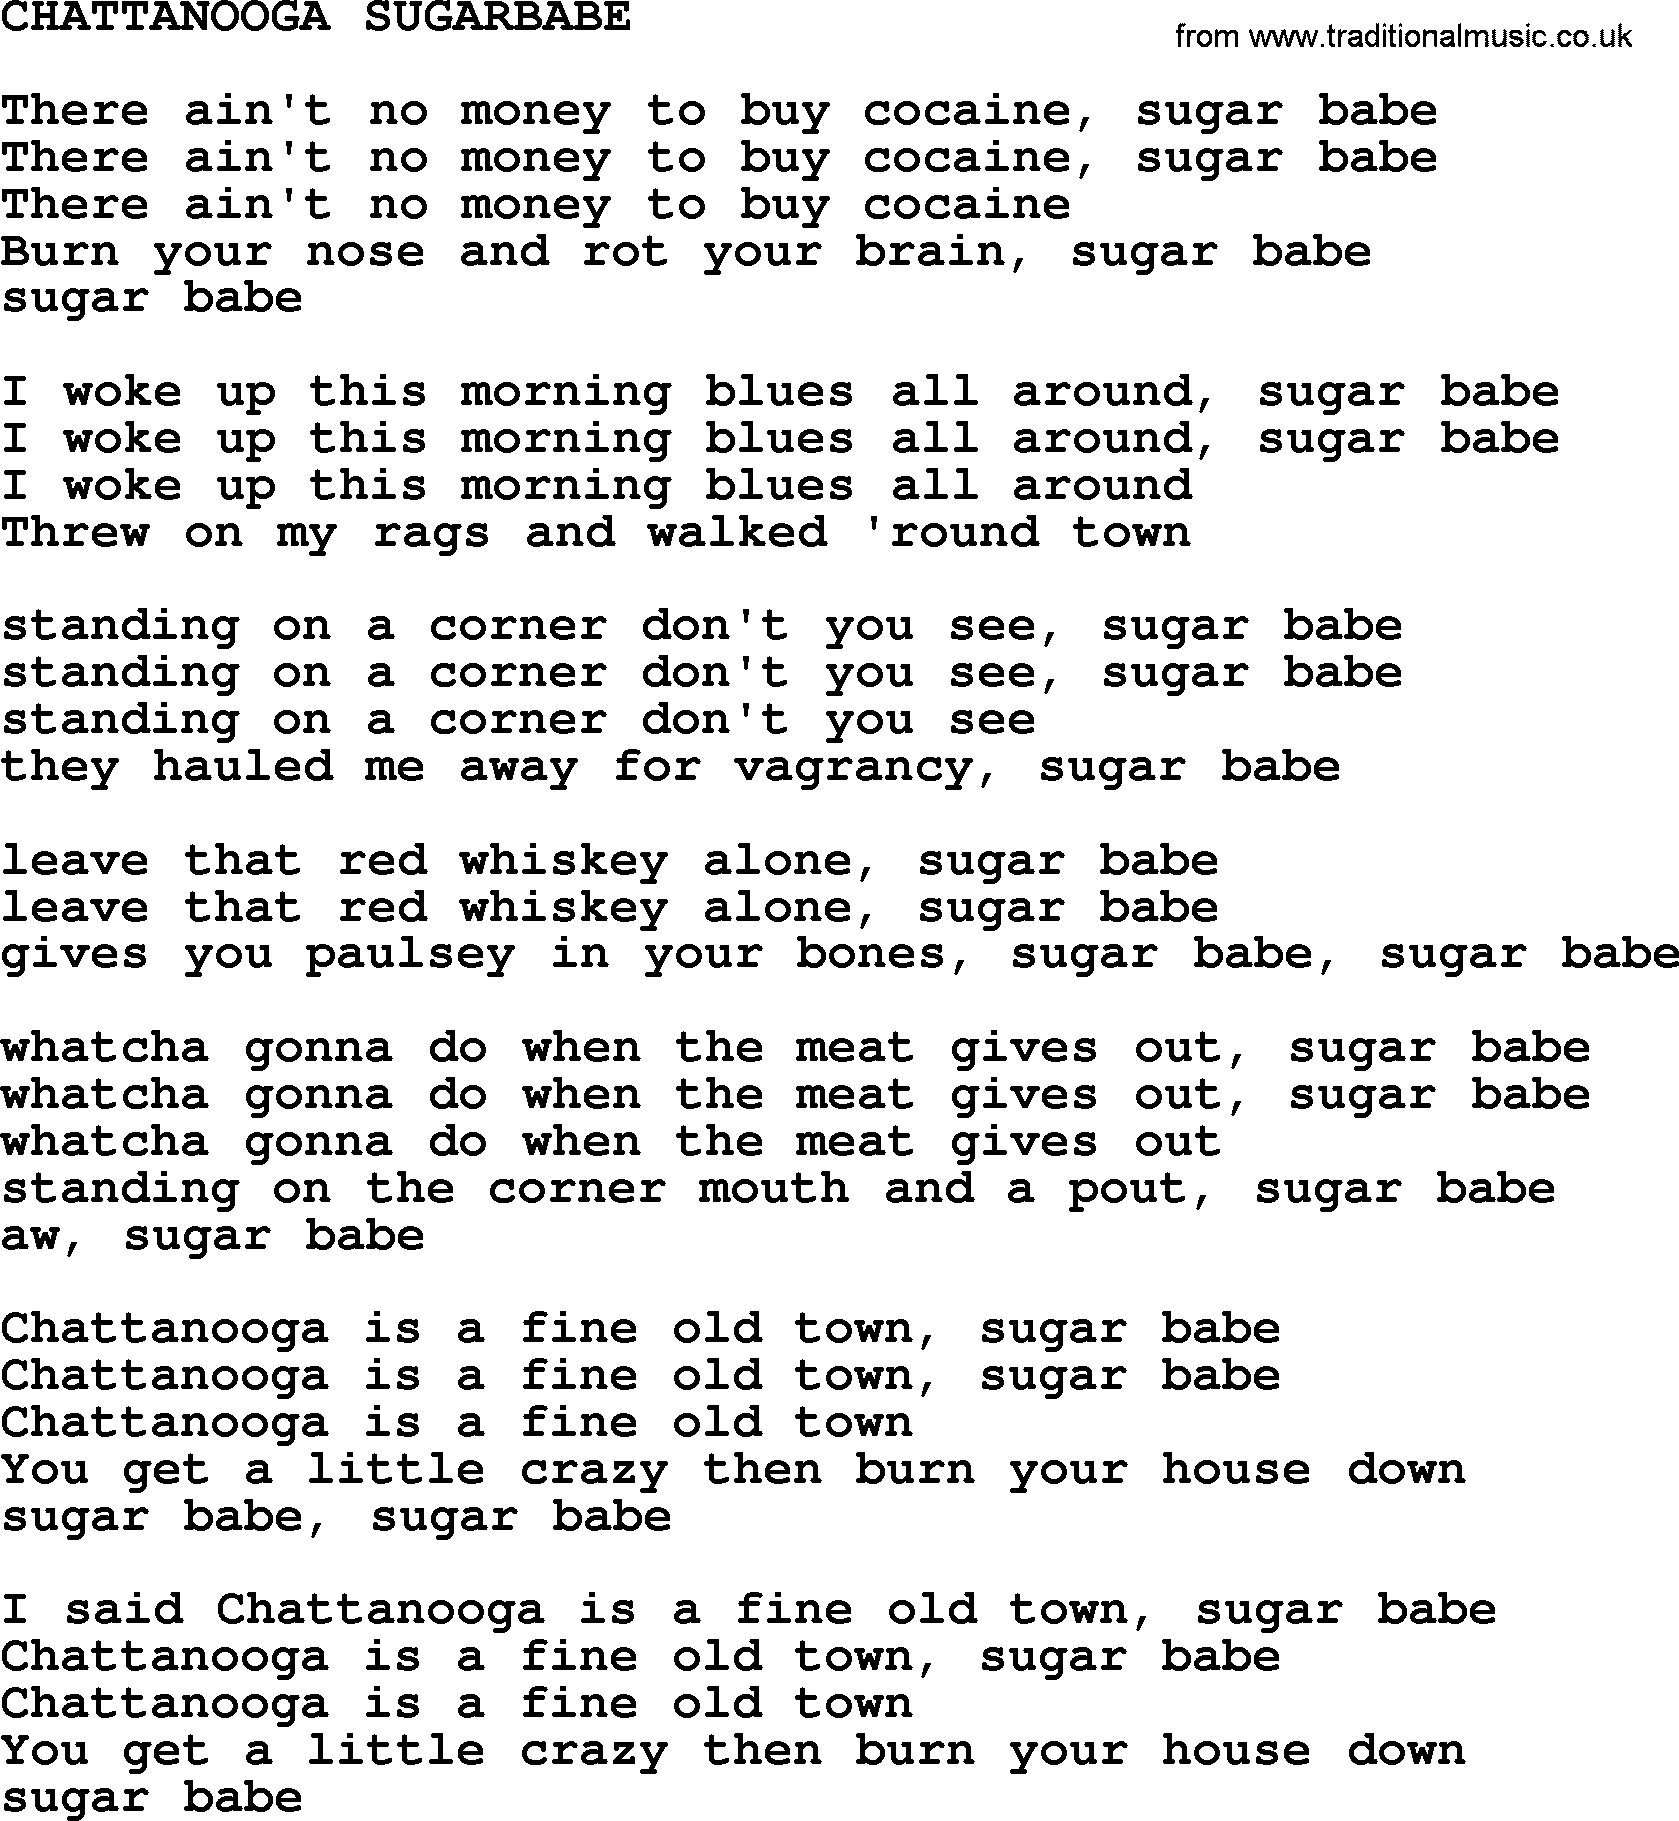 Johnny Cash song Chattanooga Sugarbabe.txt lyrics